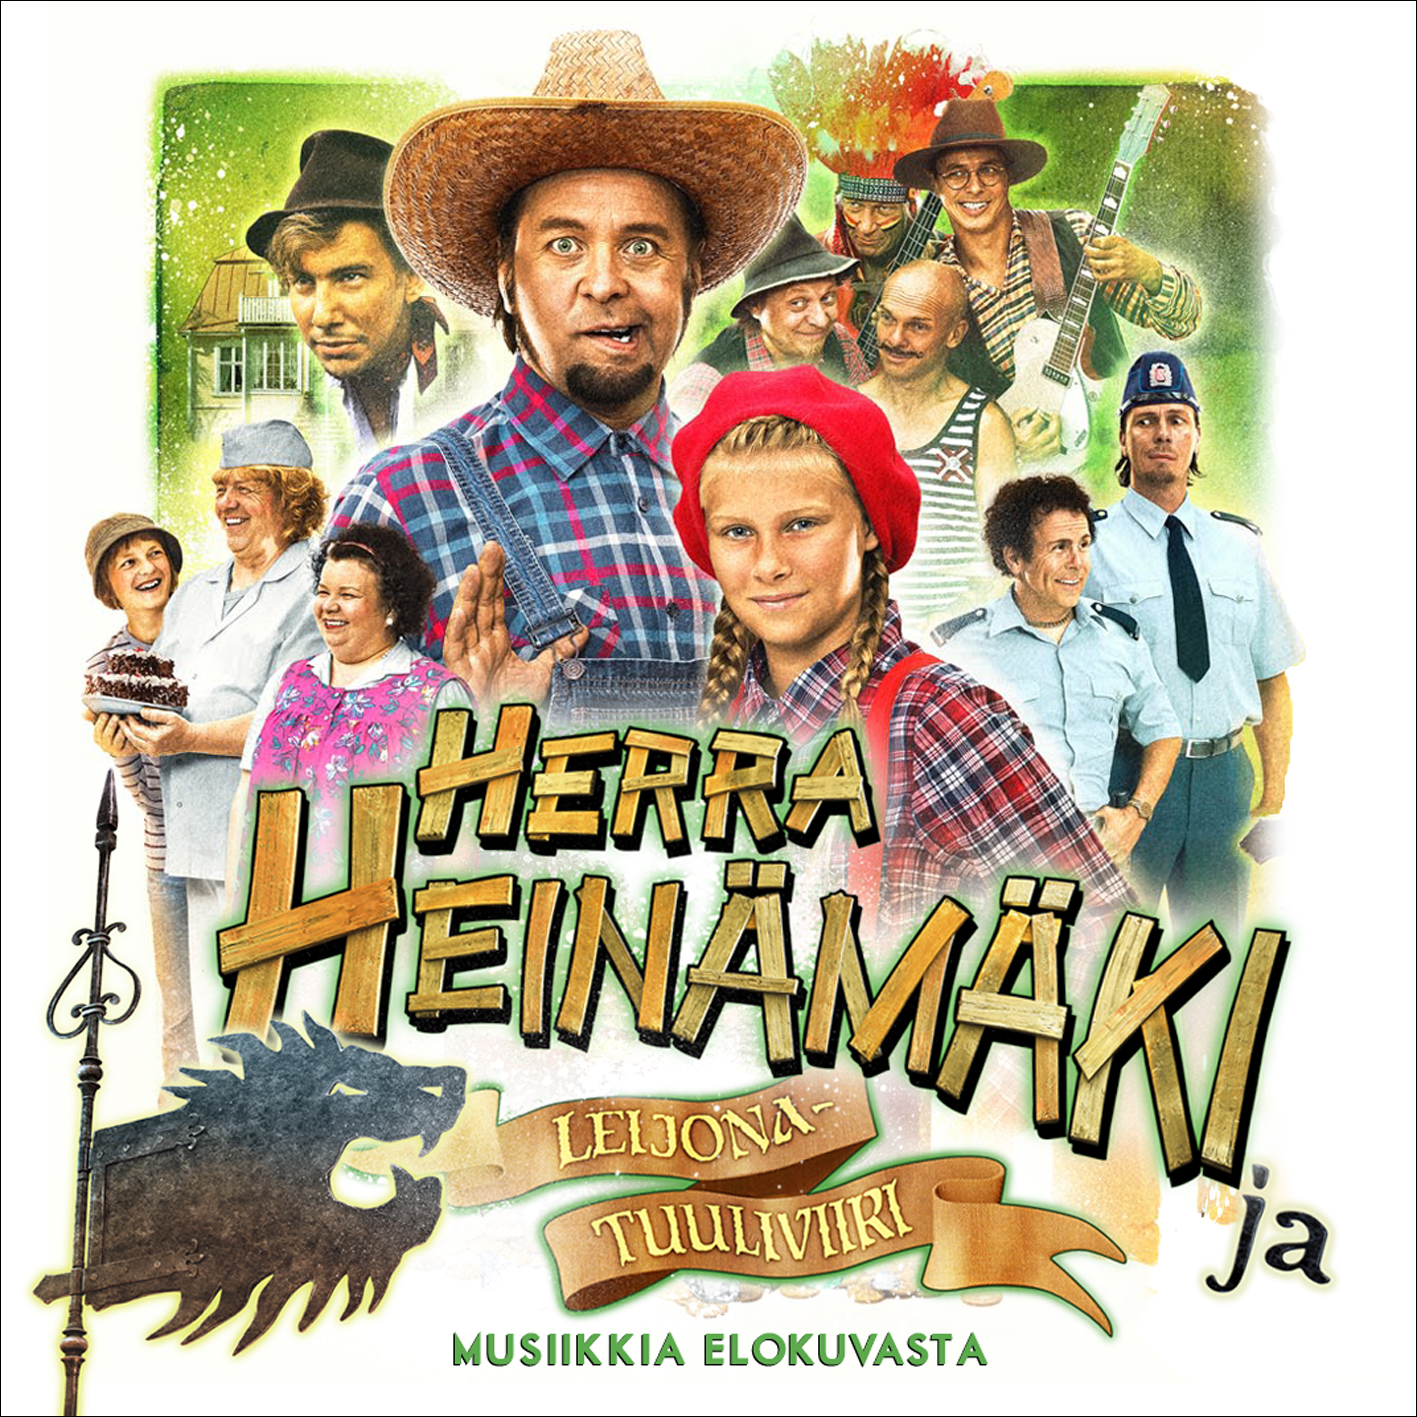 Soundtrack - Herra Hein m ki Ja Leijonatuuliviir - CD